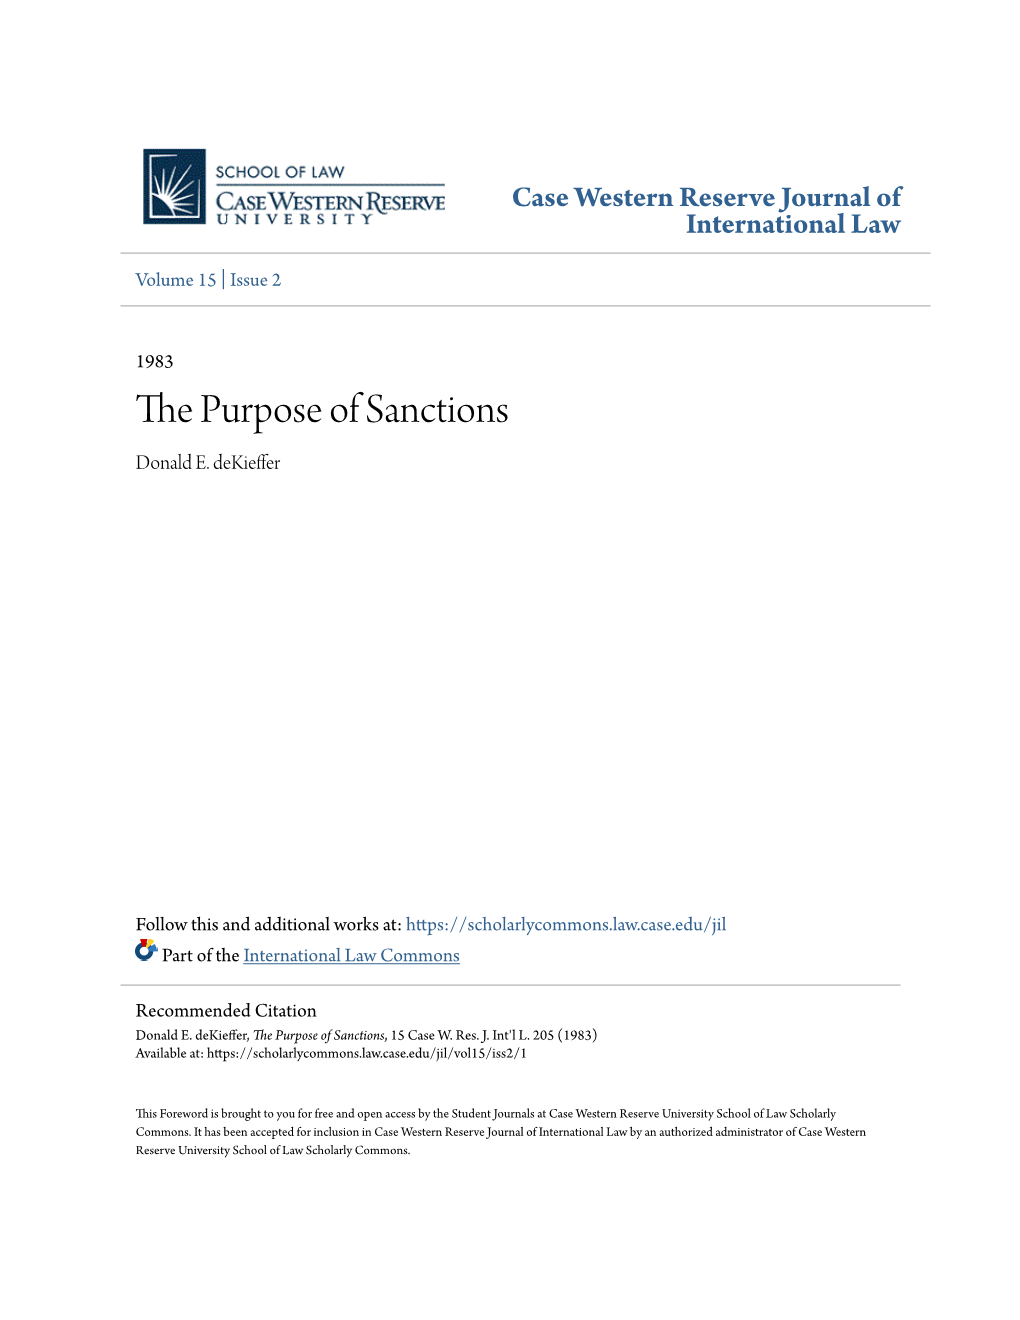 The Purpose of Sanctions Donald E